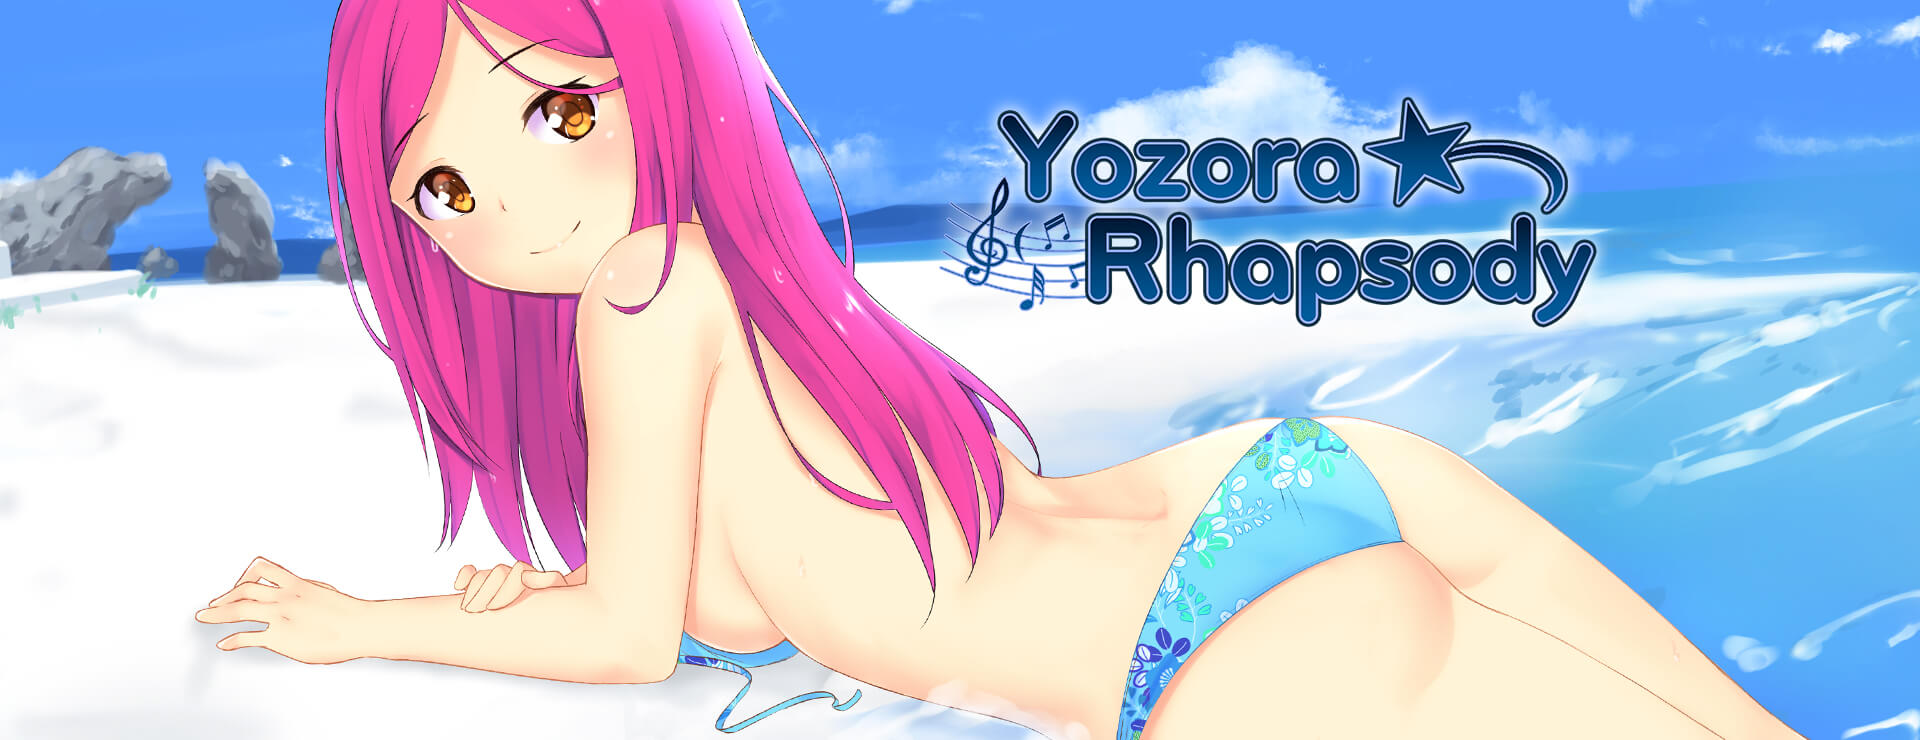 Yozora Rhapsody - 虚拟小说 遊戲